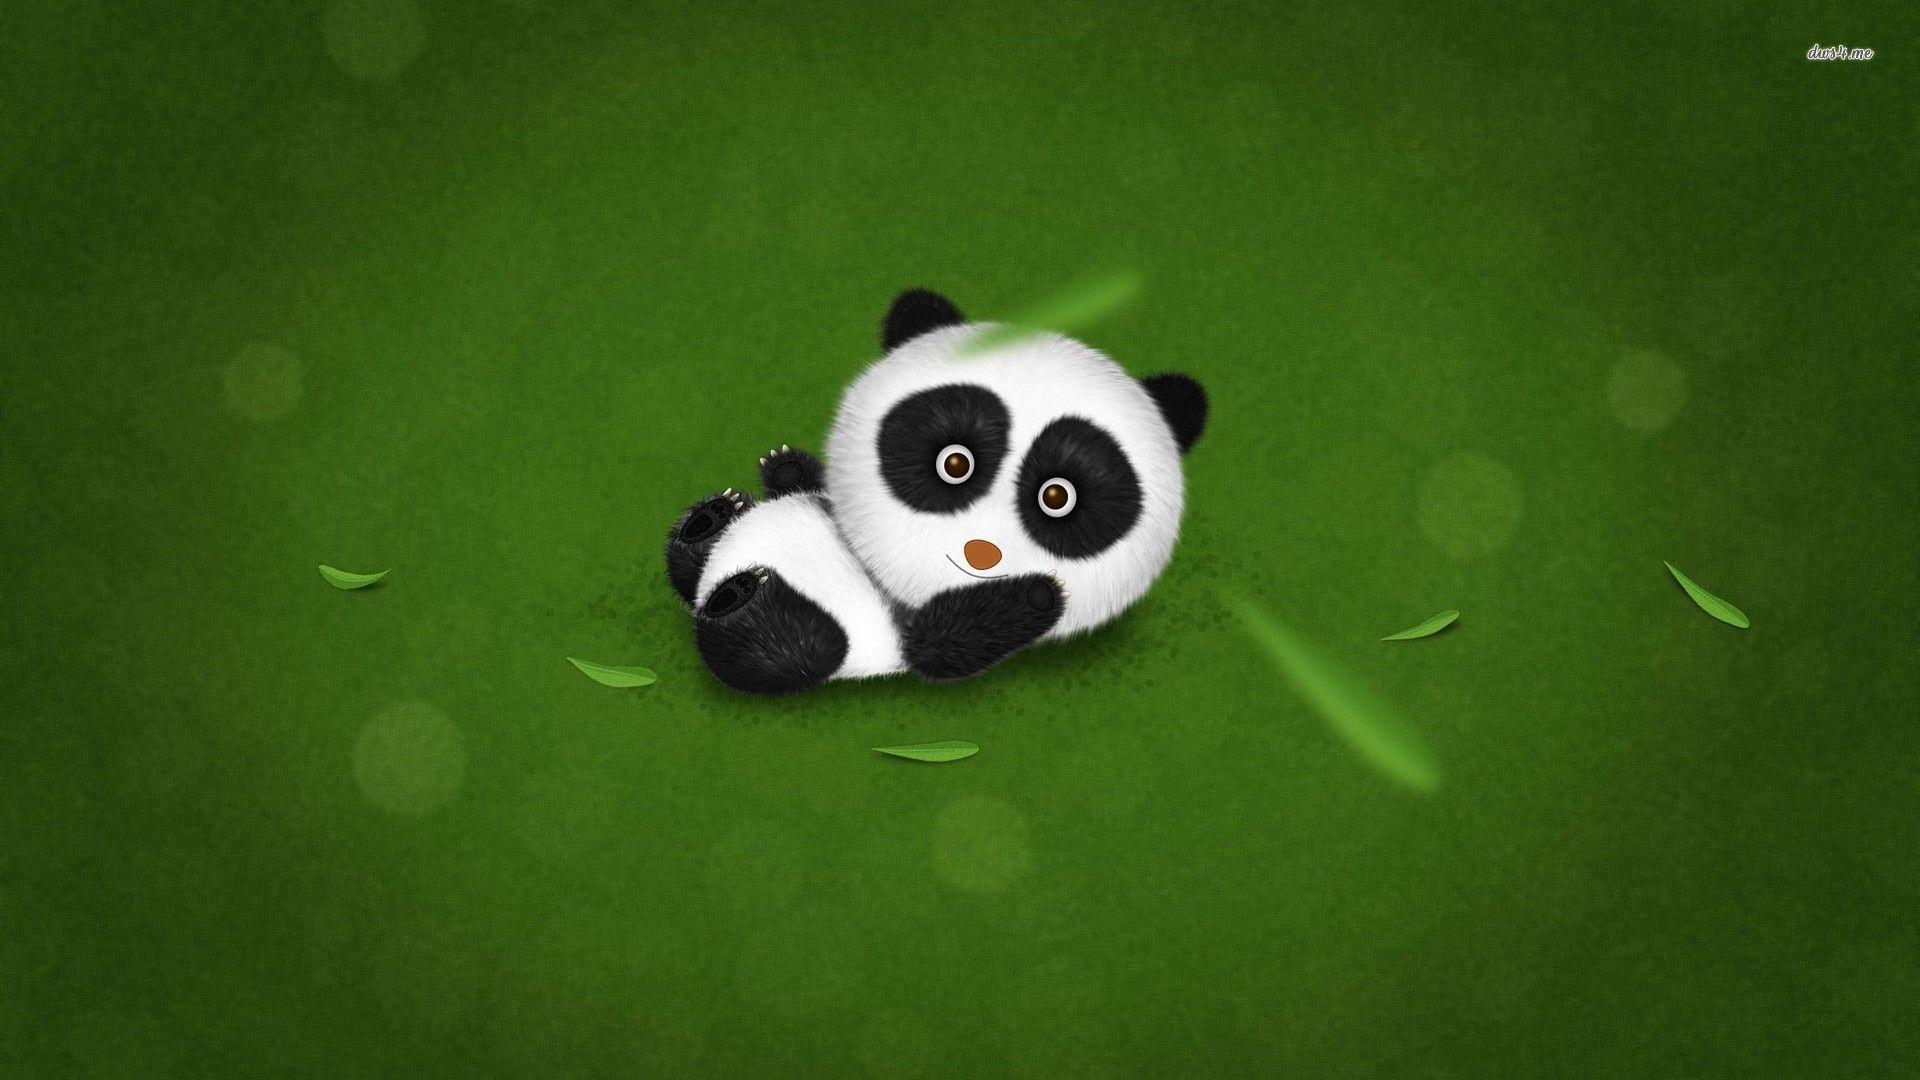 Cute Panda Cartoon Wallpaper Hd Images amp Pictures   Becuo 1920x1080